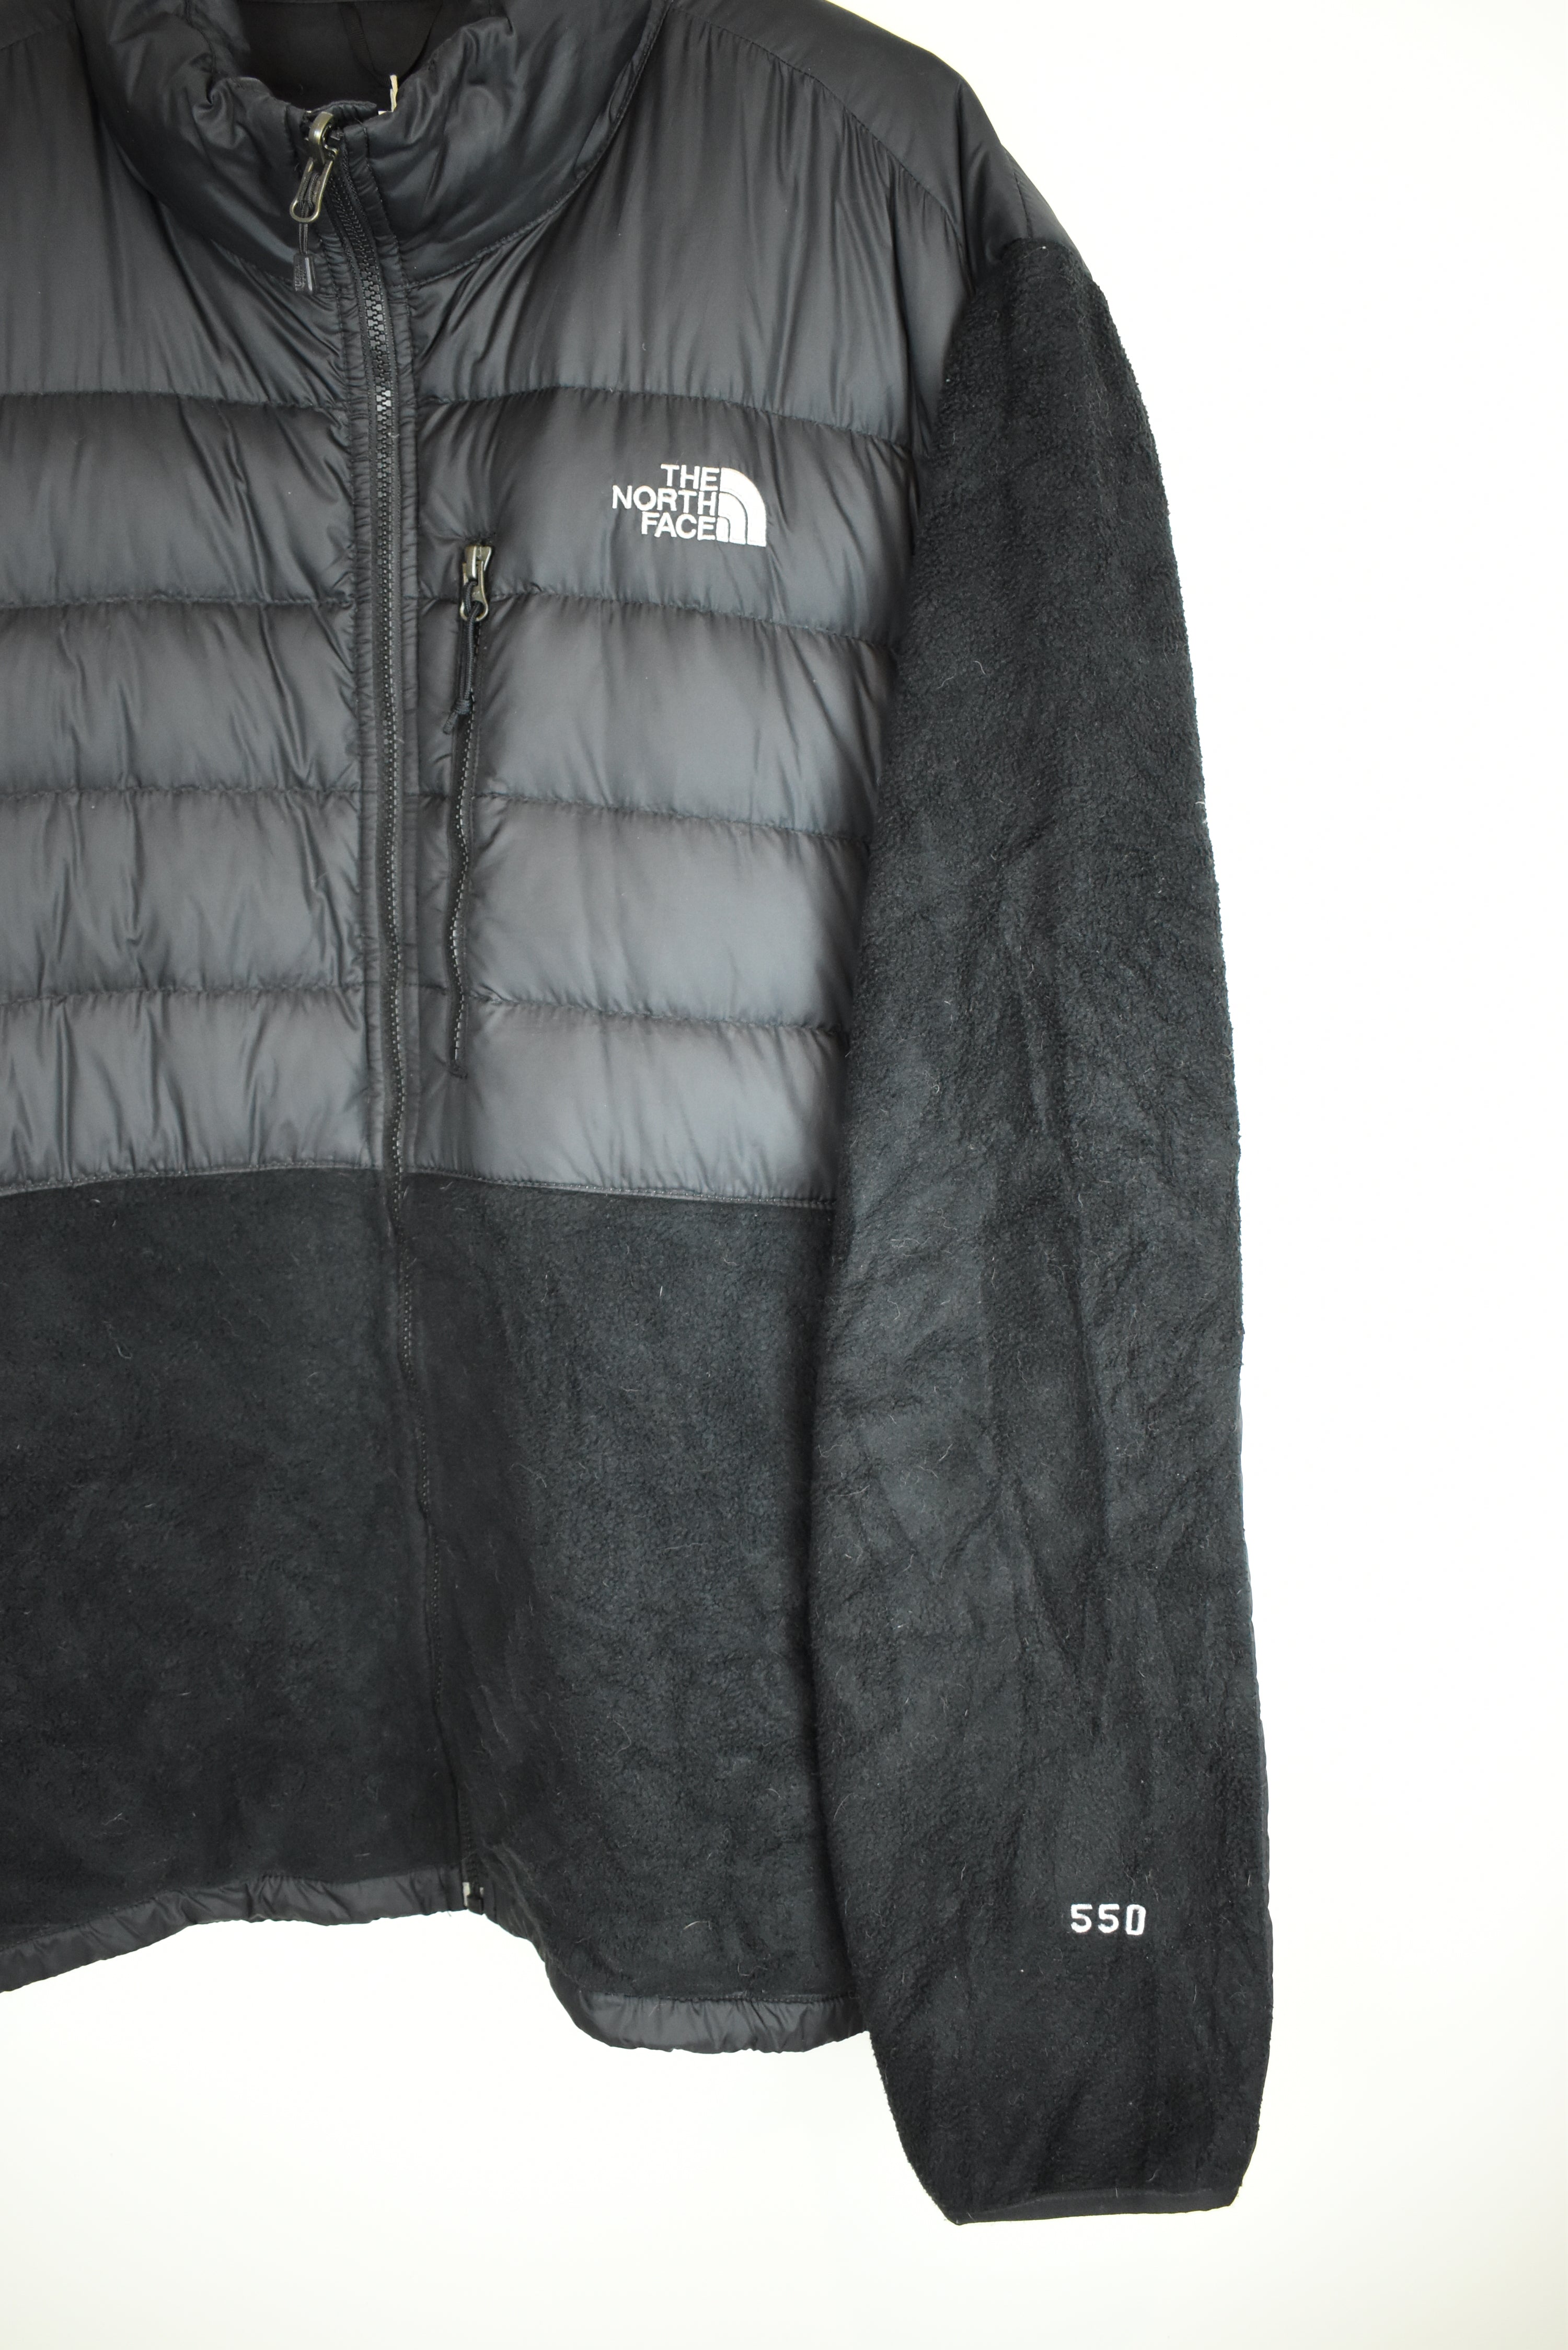 Vintage North Face Puffer Denali Fleece 550 XXL | Vintage Clothing